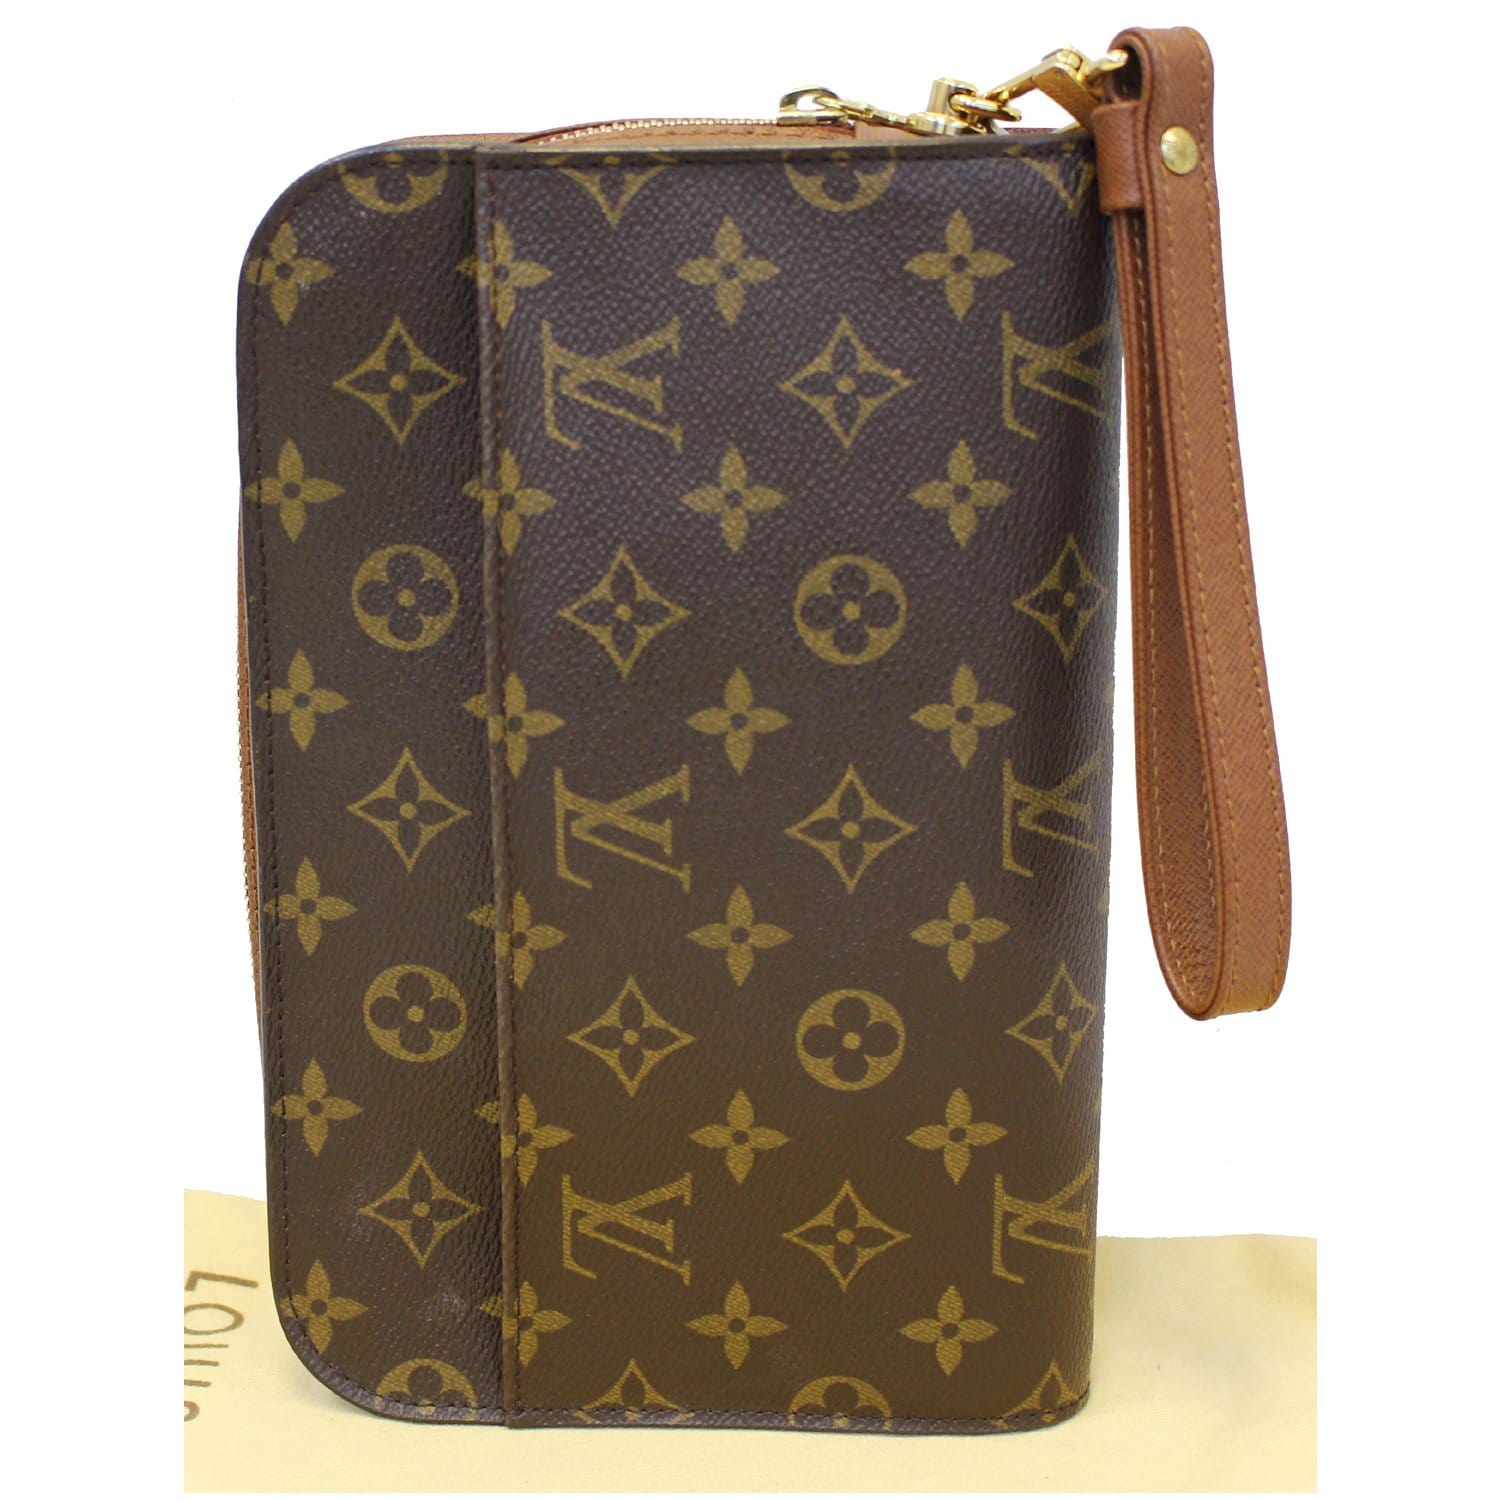 Oooo naughty little vintage Louis Vuitton orsay clutch bag